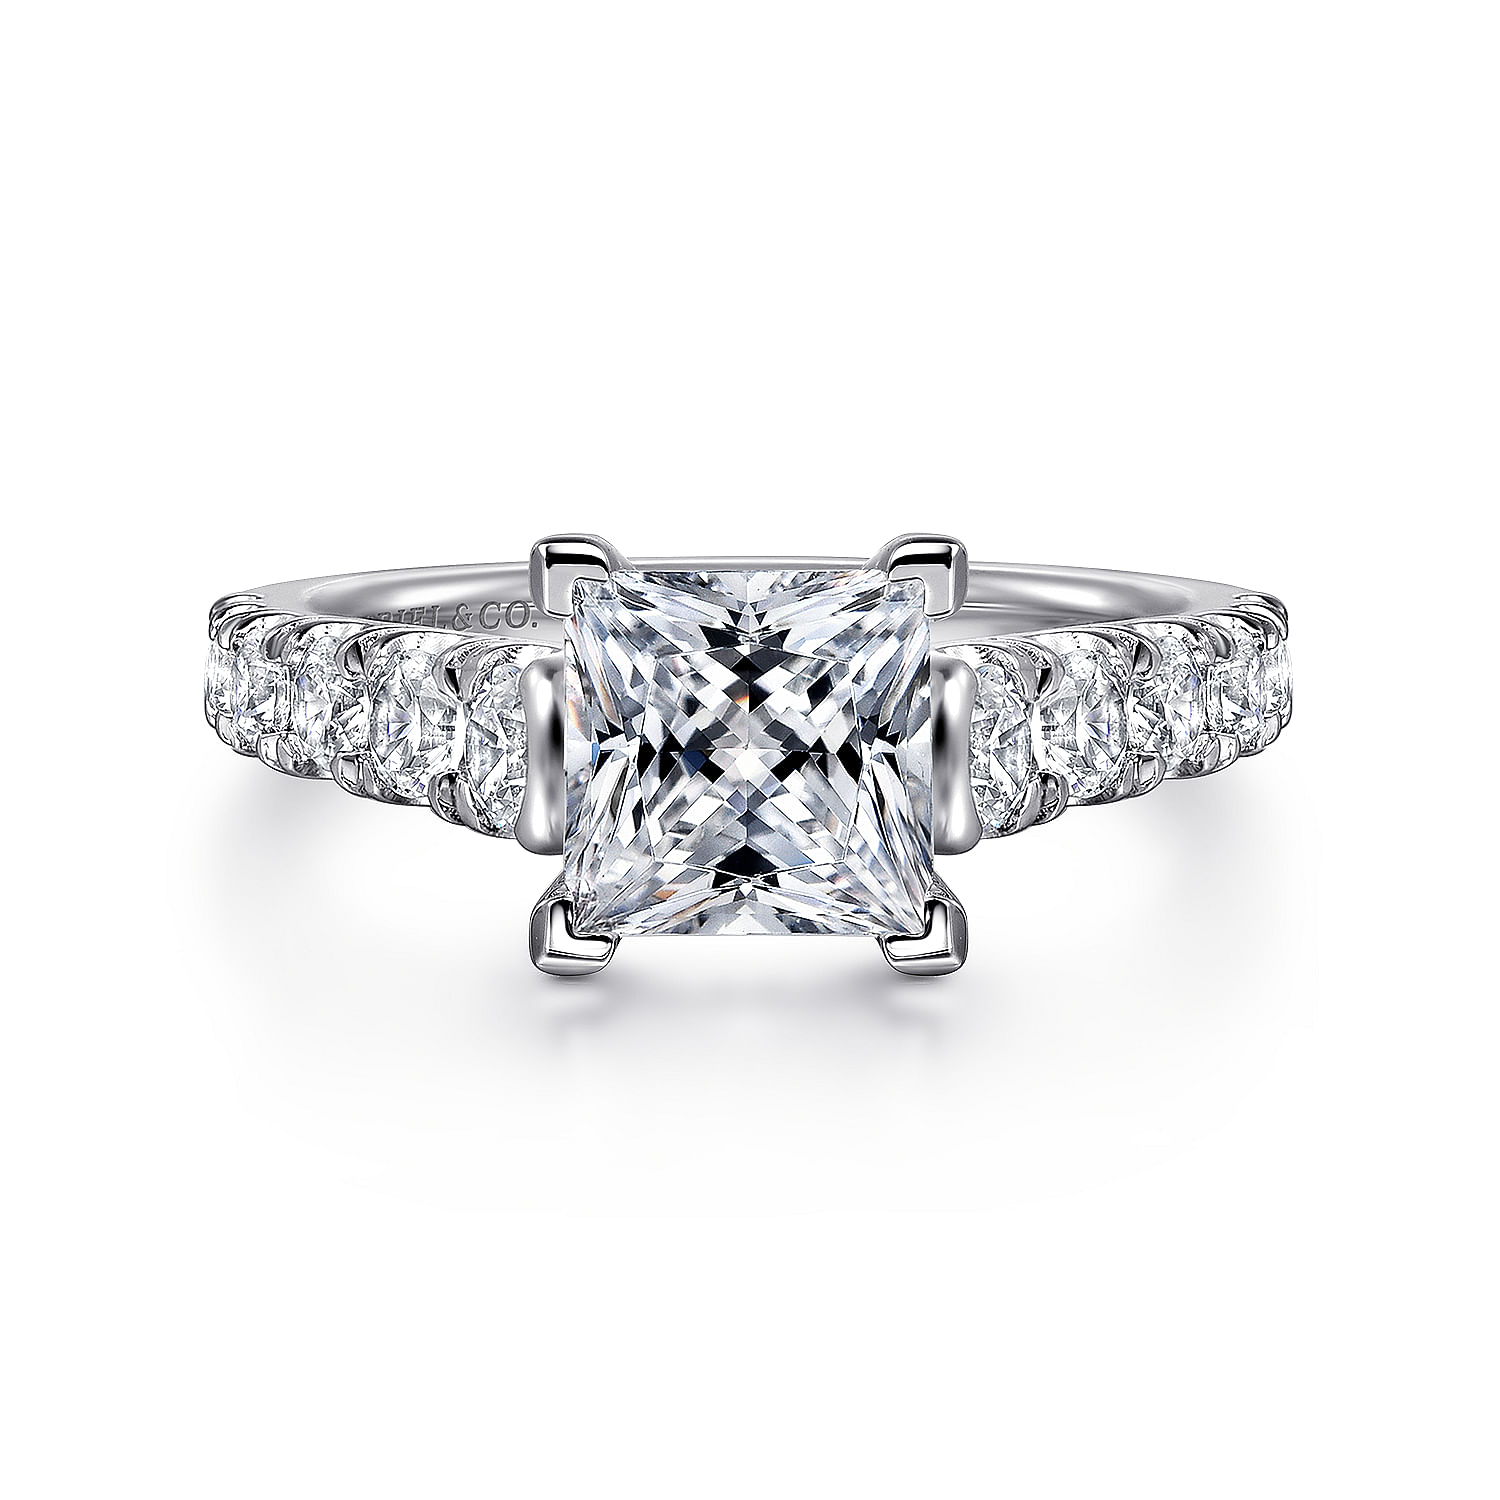 Piper - 14K White Gold Princess Cut Diamond Engagement Ring